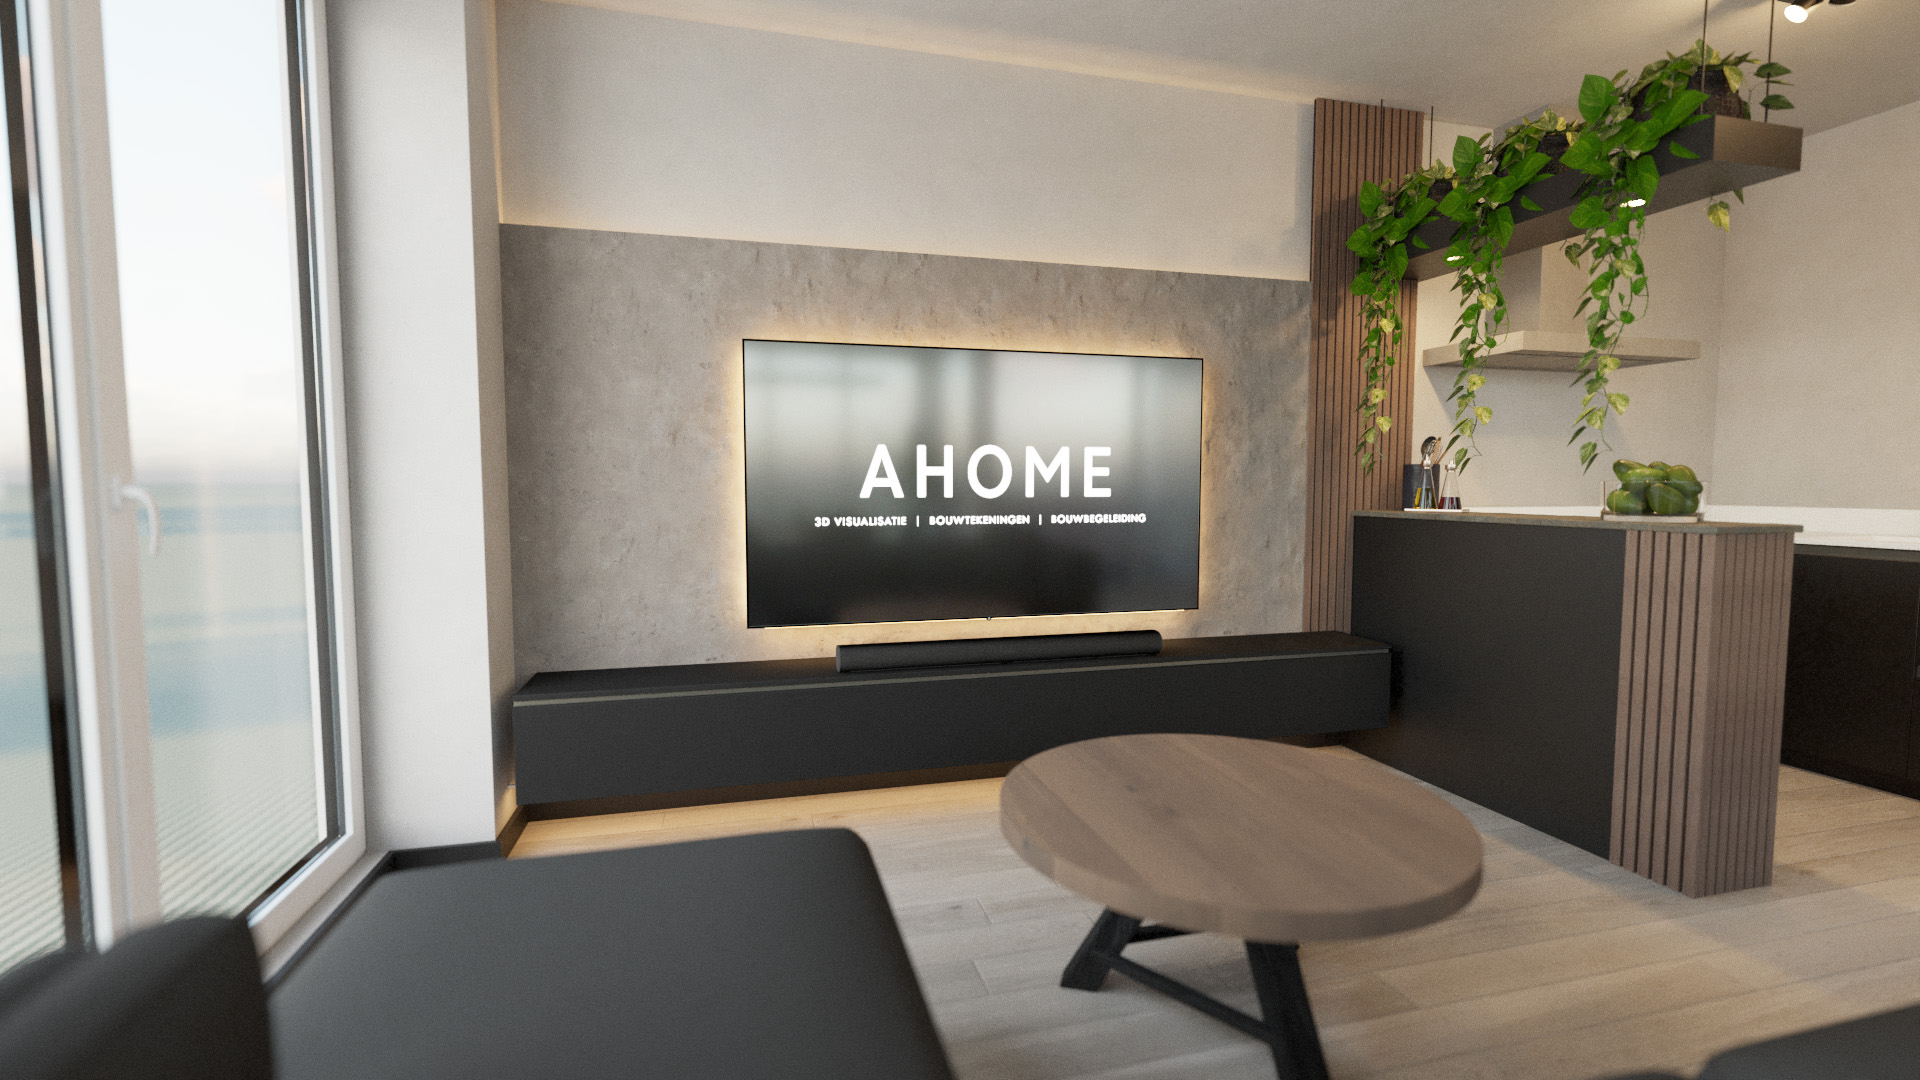 AHOME - Interieur Appartement Eindhoven